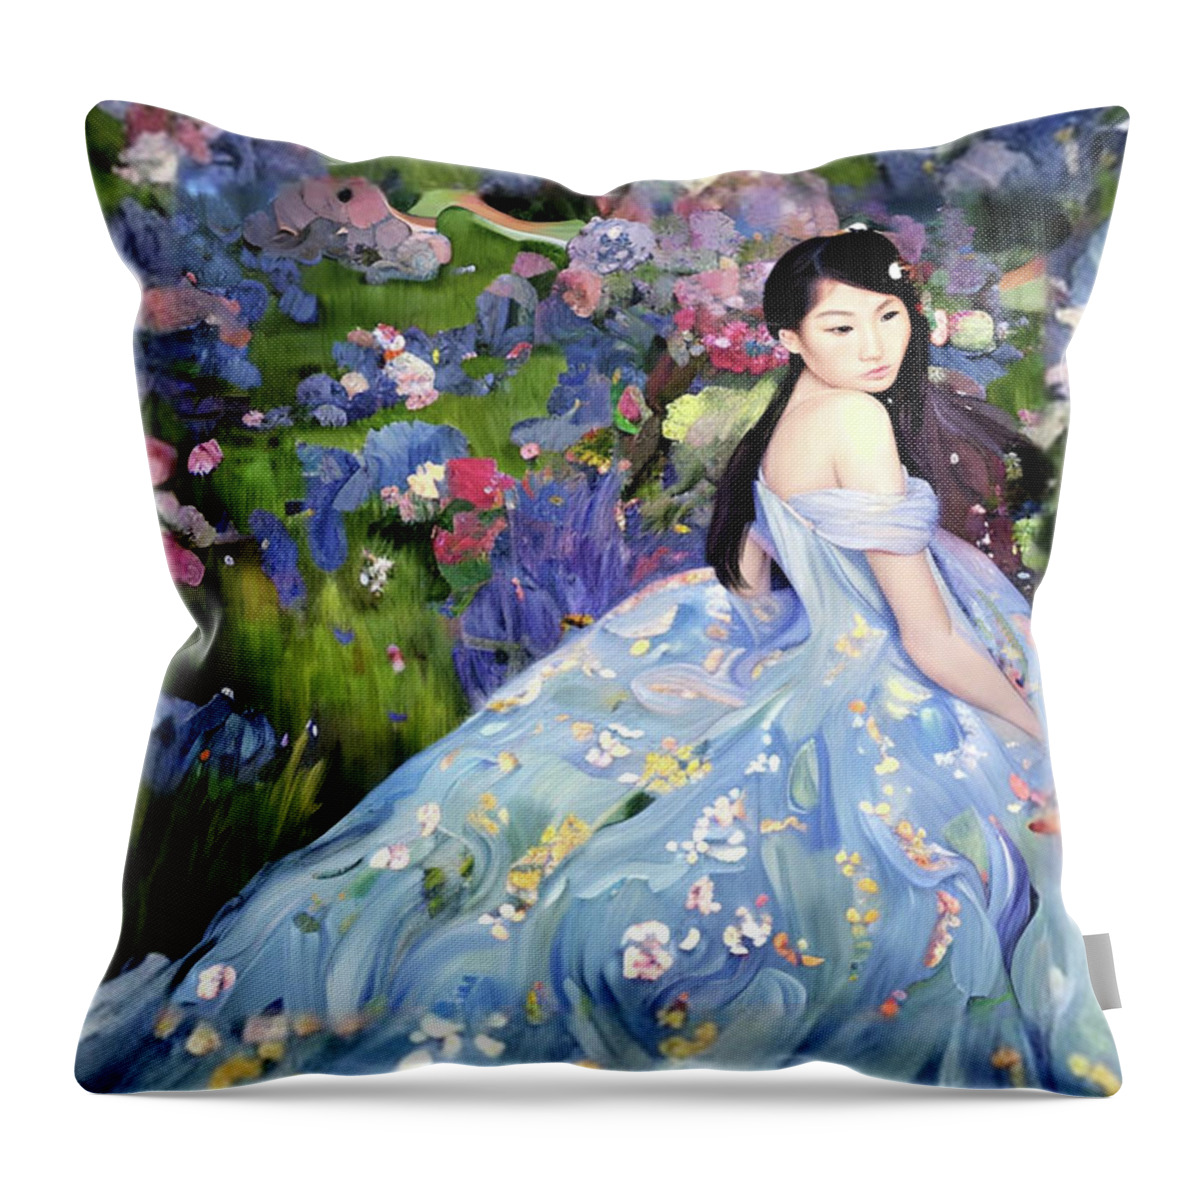 Japanese Throw Pillow featuring the digital art Japanese Garden Beauty by Stacey Mayer